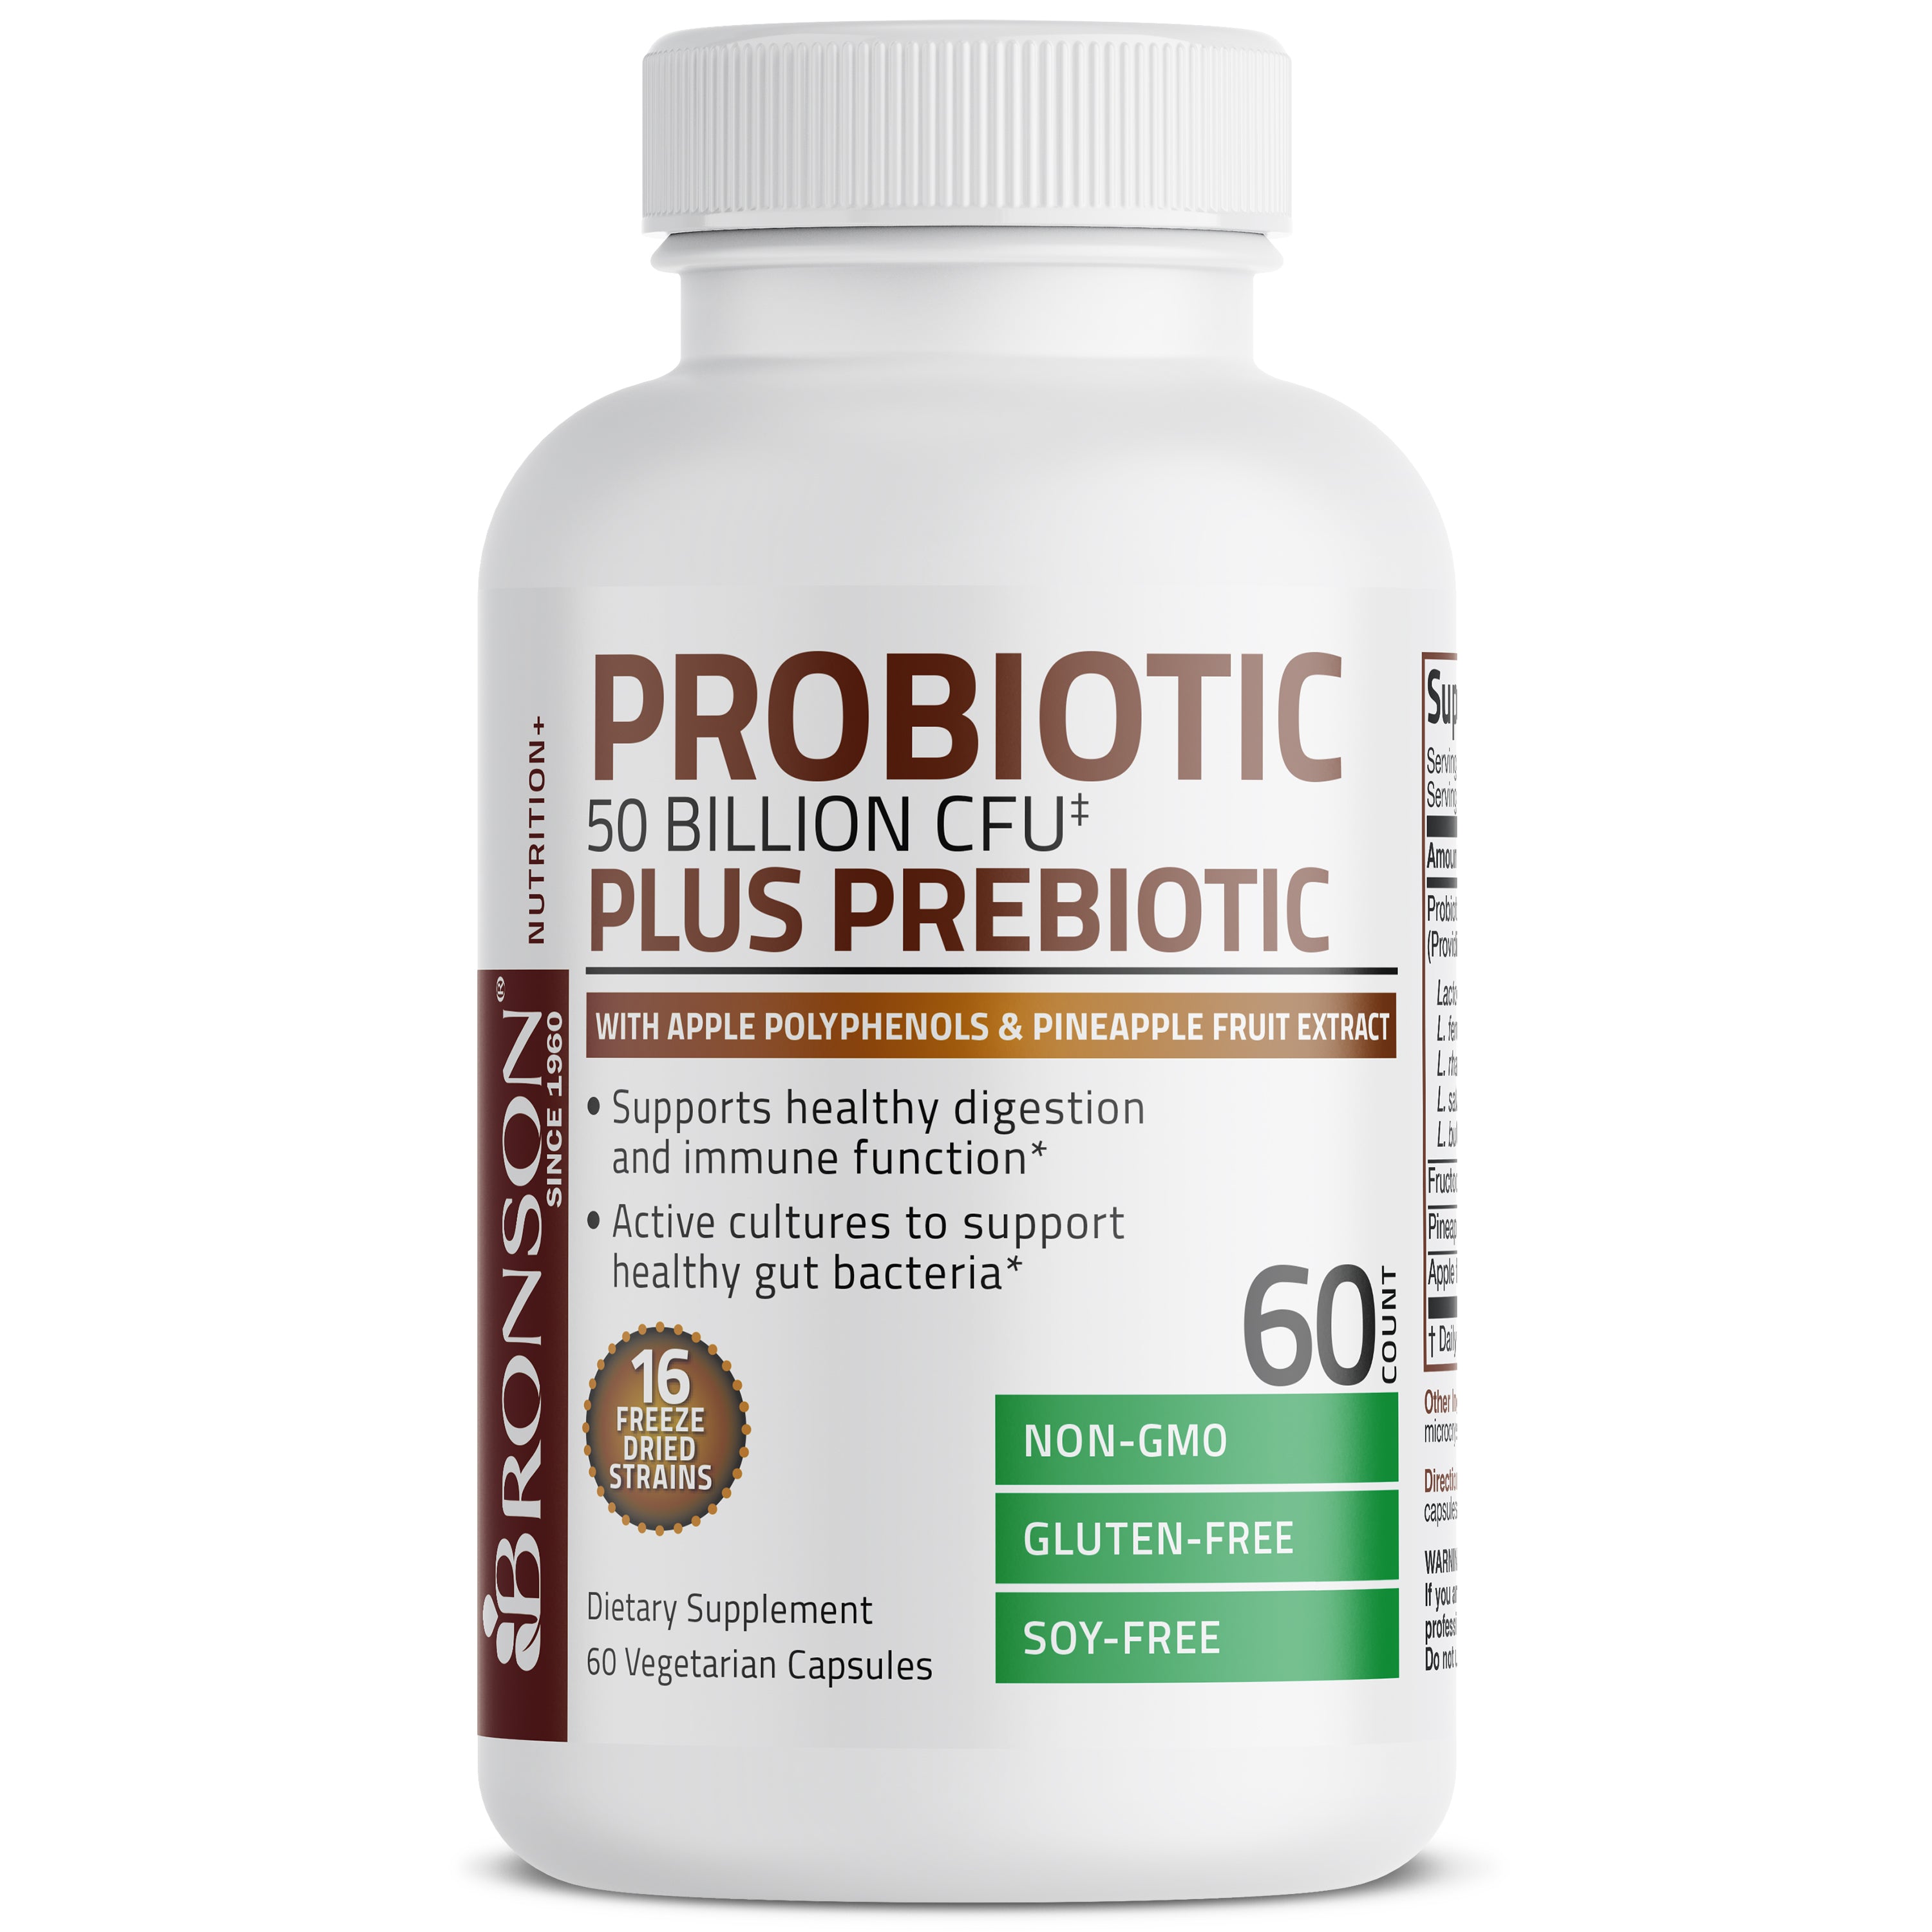 Probiotic Plus Prebiotic - 50 Billion CFU - 60 Vegetarian Capsules view 4 of 7